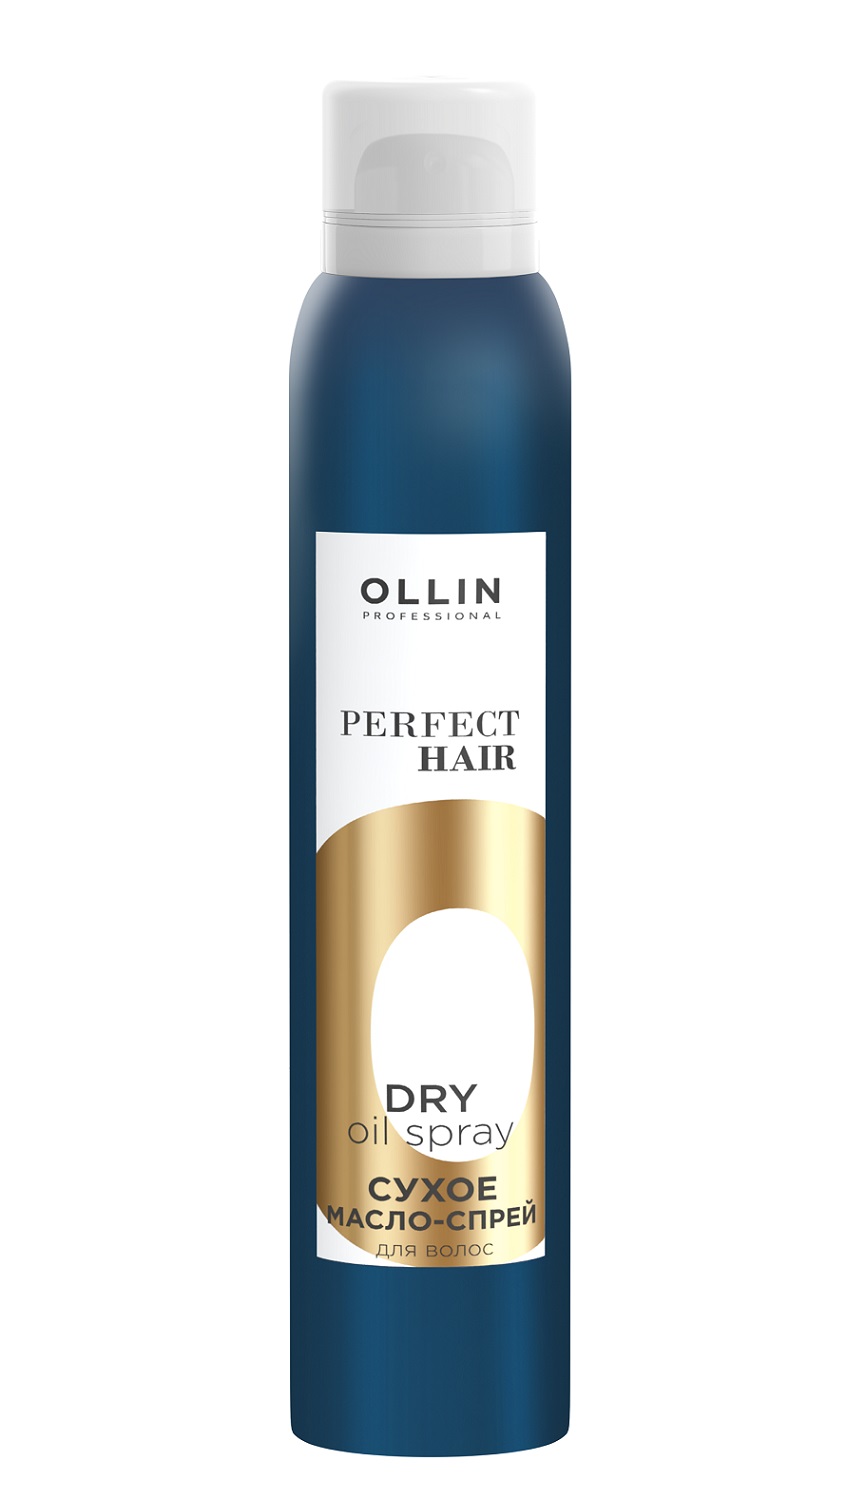 Оллин Професионал Сухое масло-спрей для волос, 200 мл (Ollin Professional, Perfect Hair) фото 0